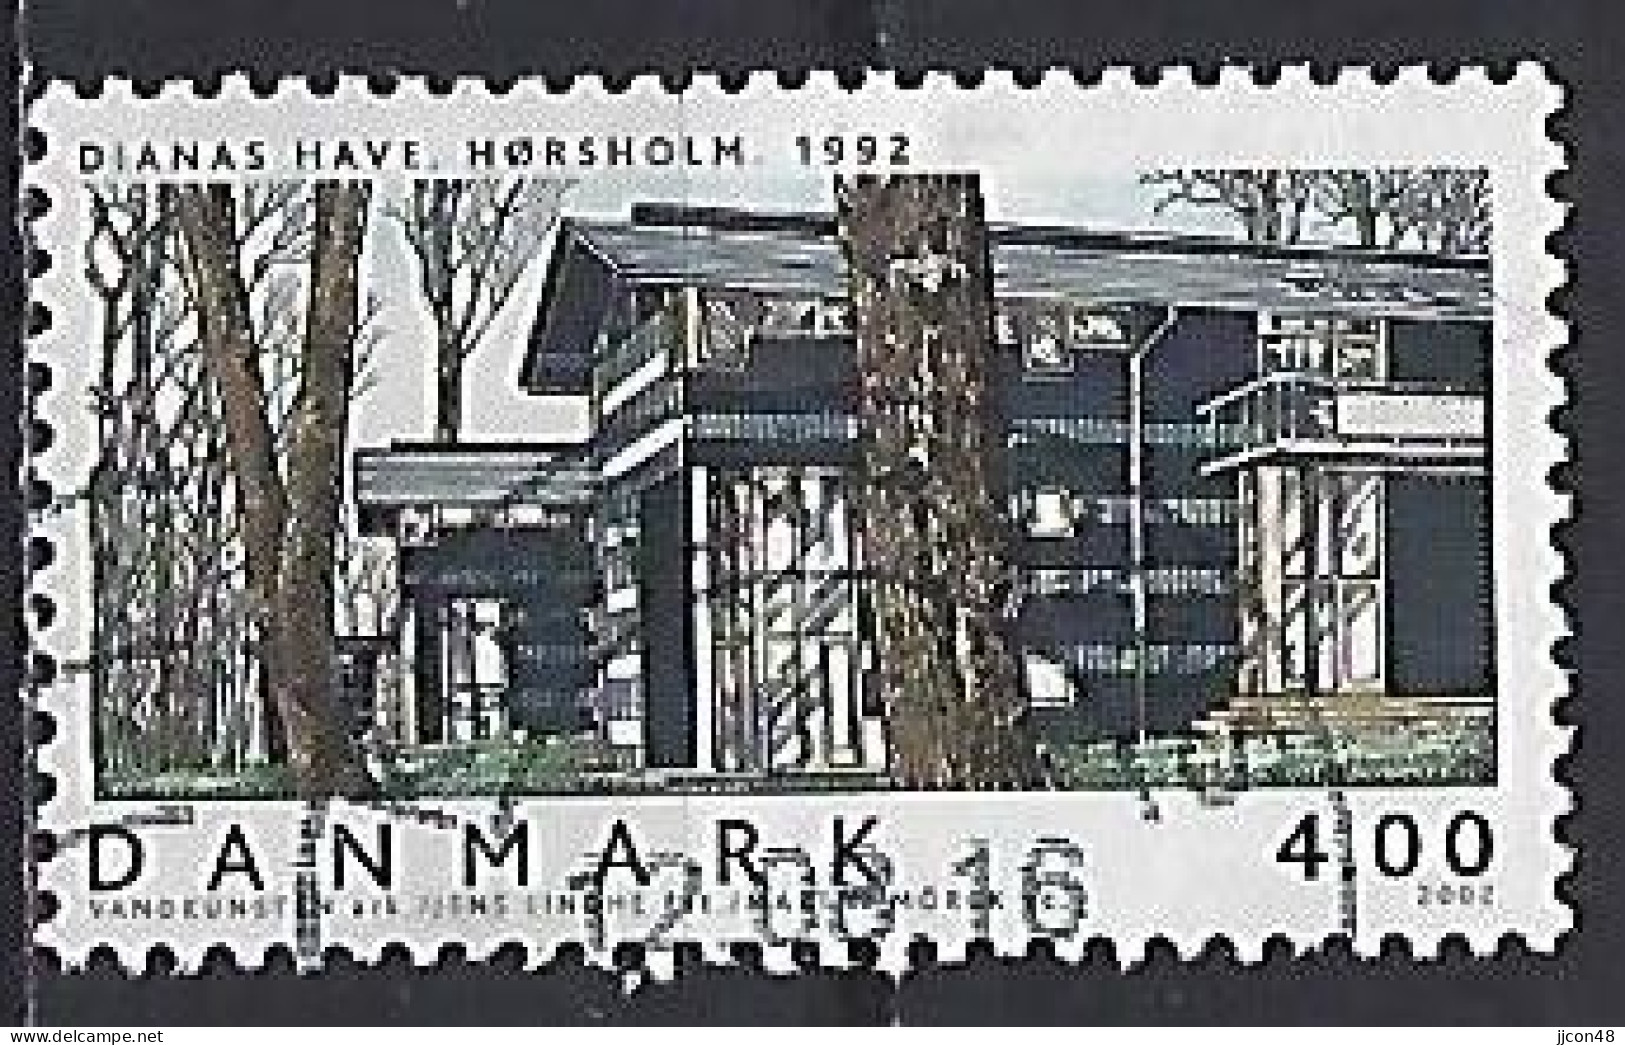 Denmark  2002  Buildings  (o) Mi.1321 - Used Stamps